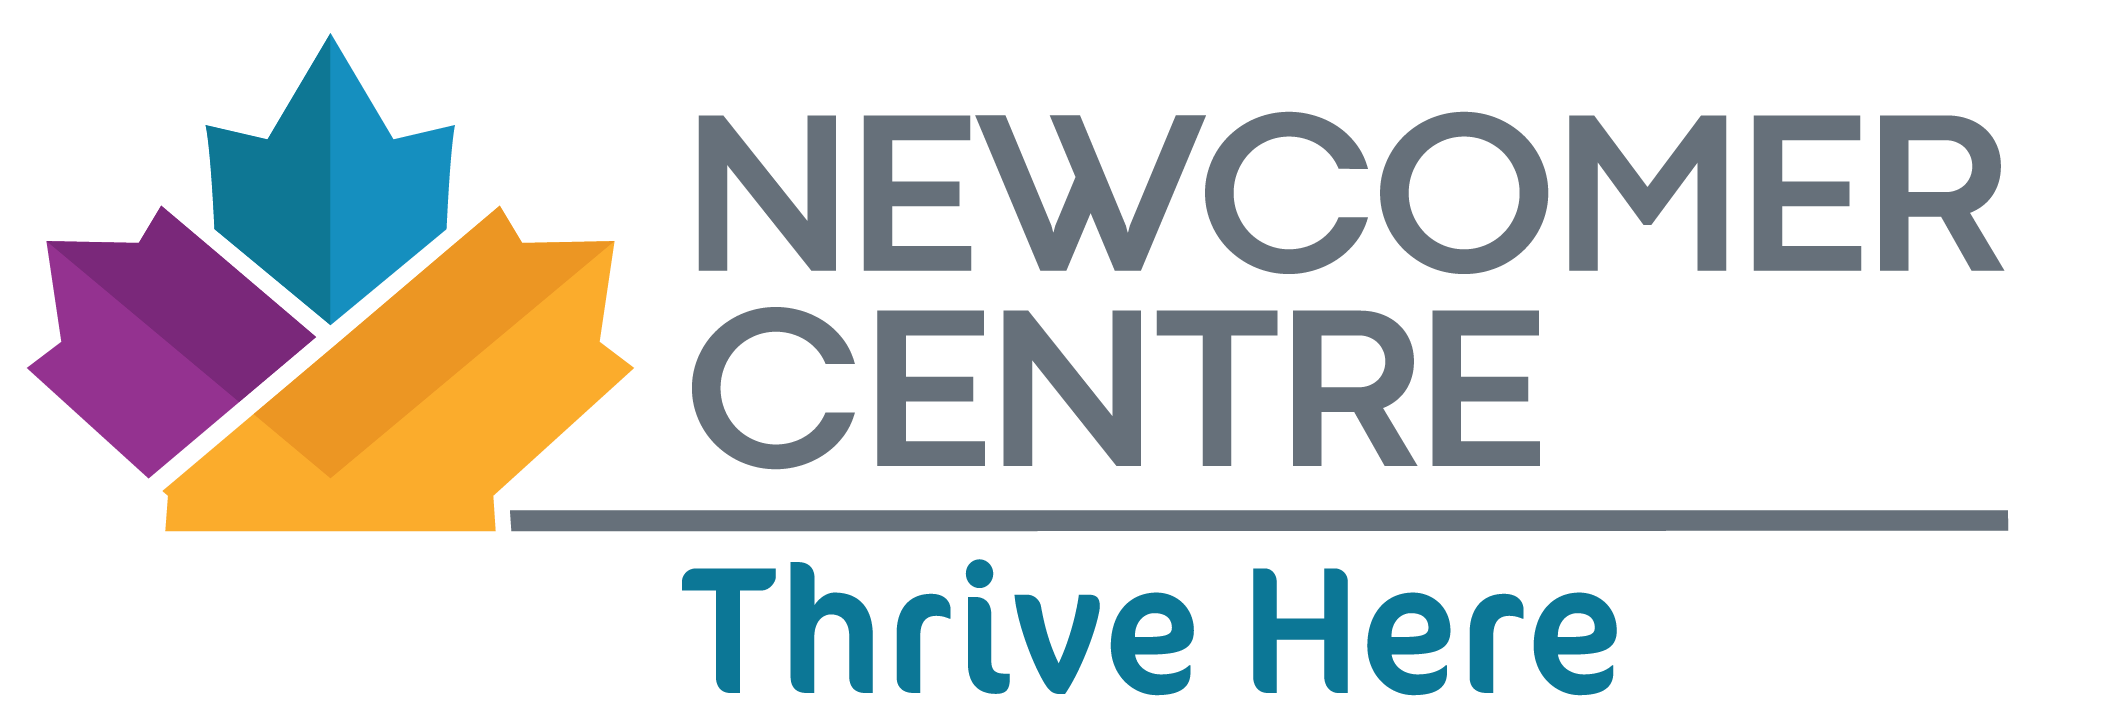 Thumbnail Newcomer Centre Logo Tagline